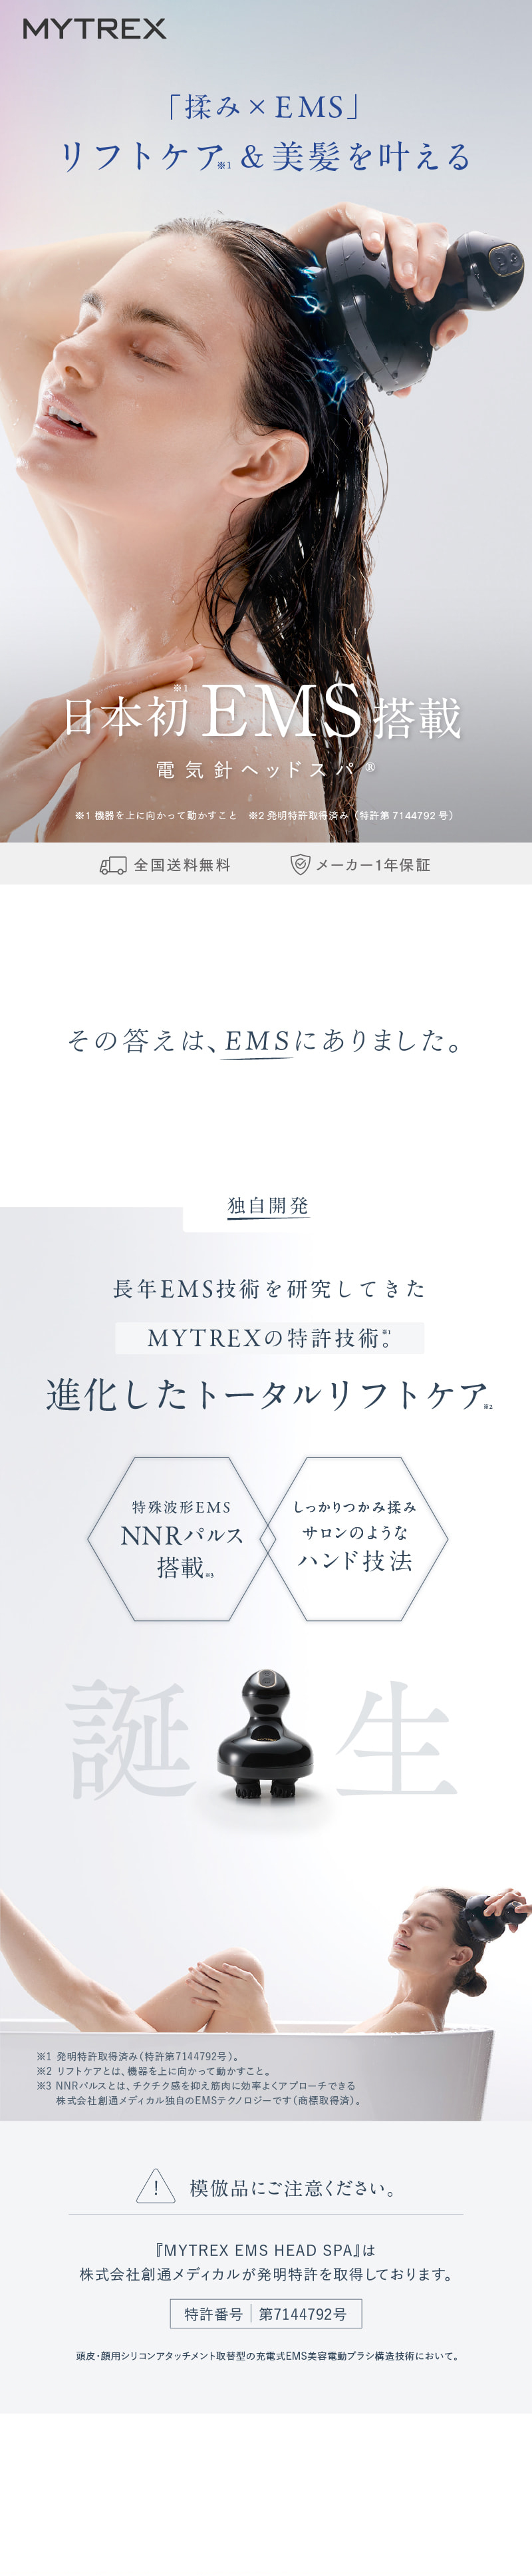 MYTREX EMS HEAD SPA 型番MT-EHS20B